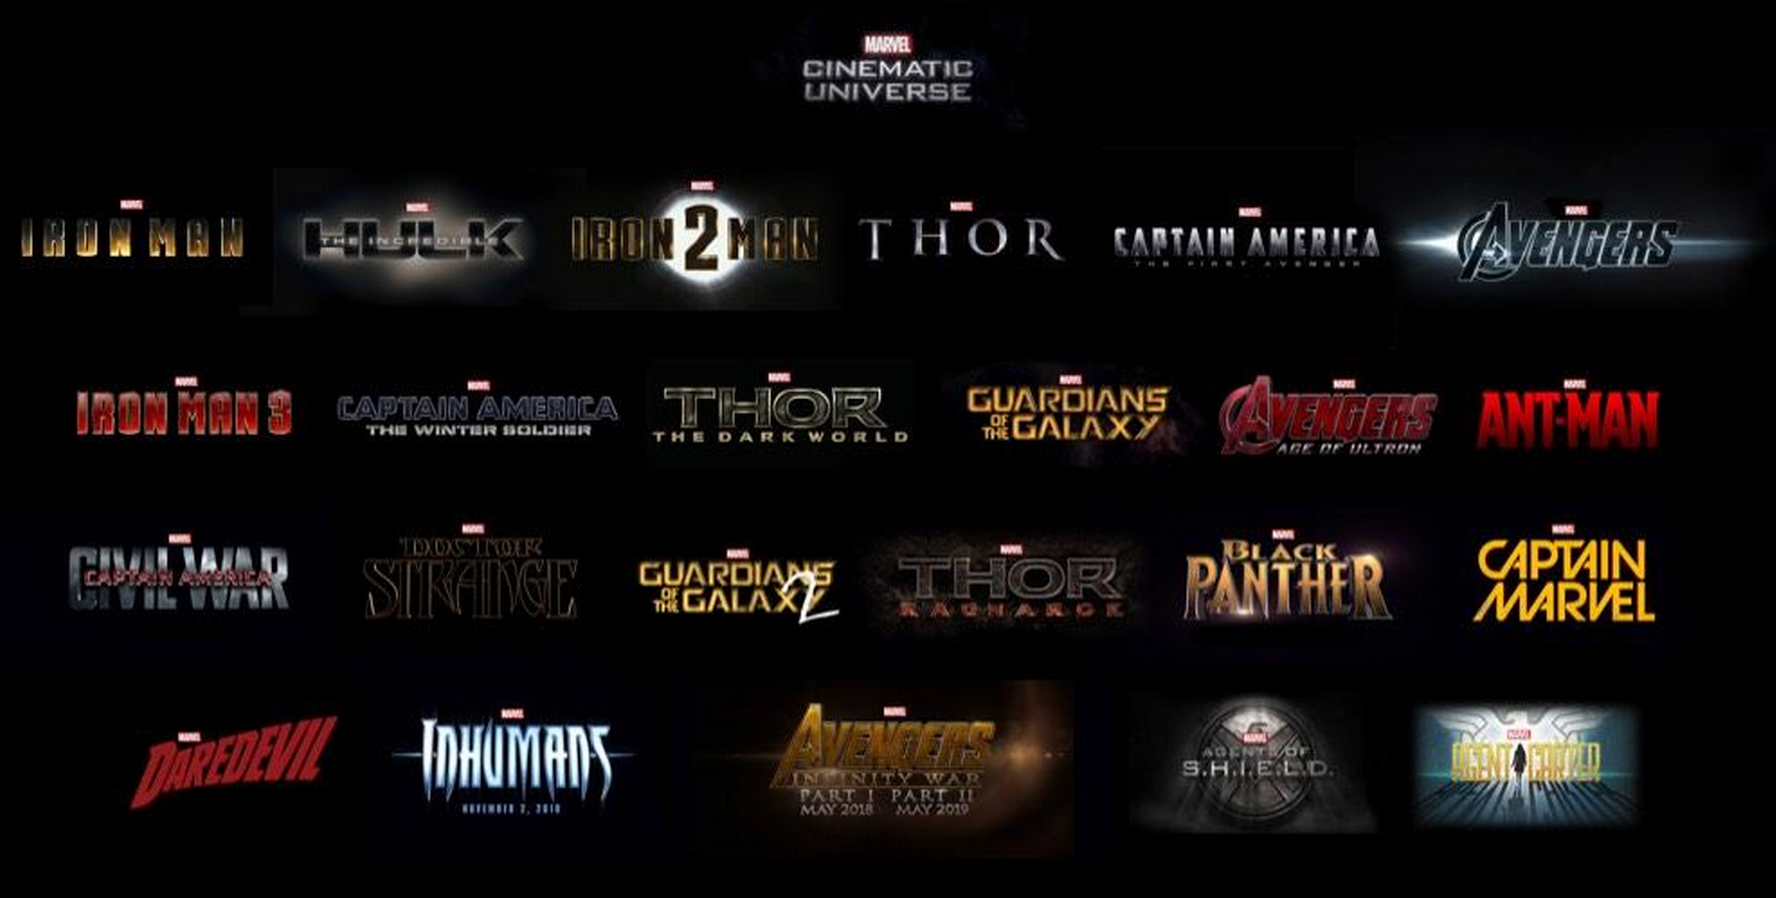 upcoming marvel movies